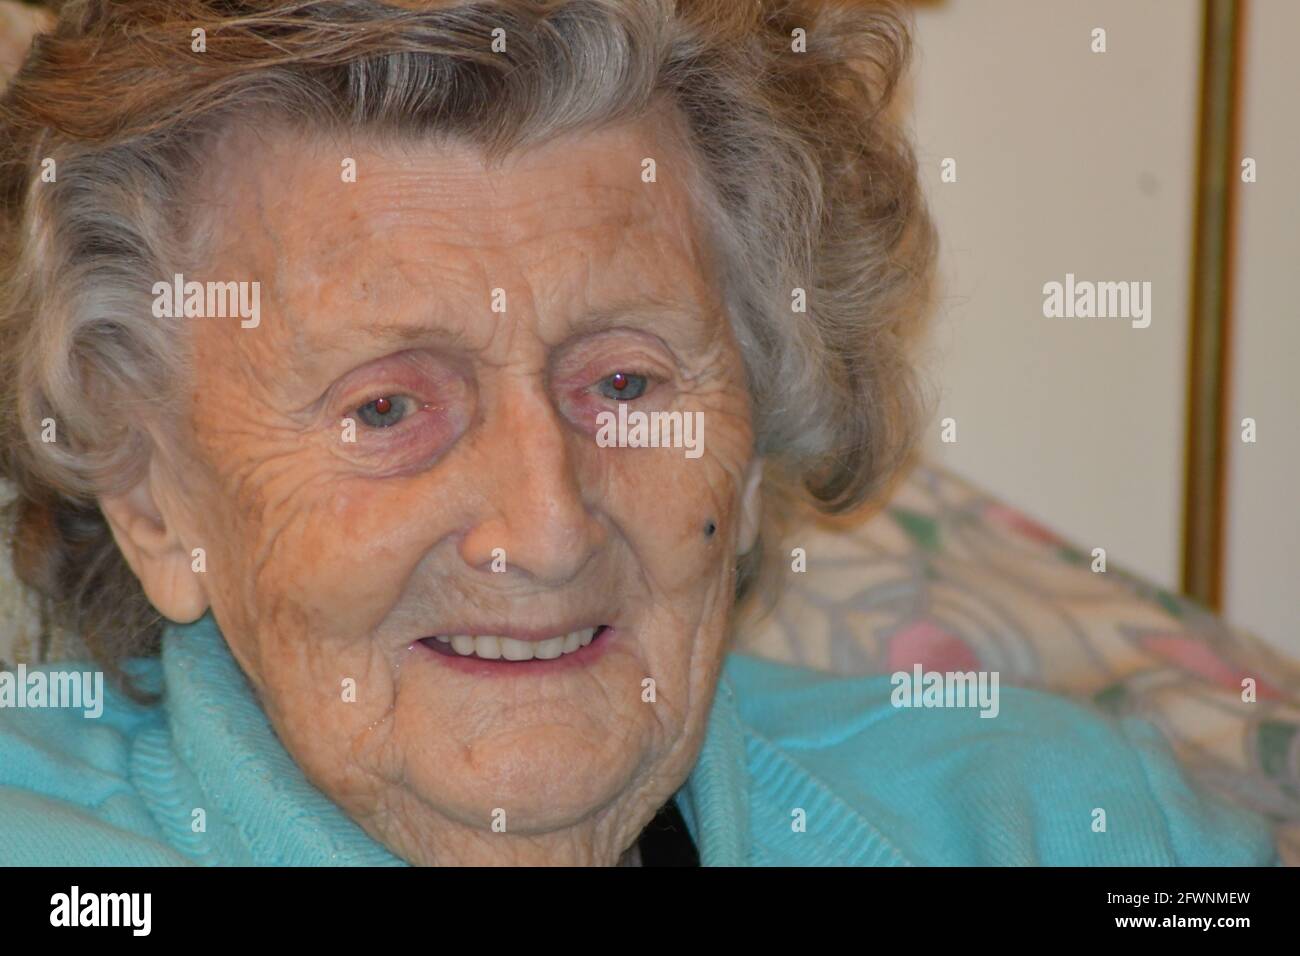 Pensive elderly woman's face close-up Stock Photo